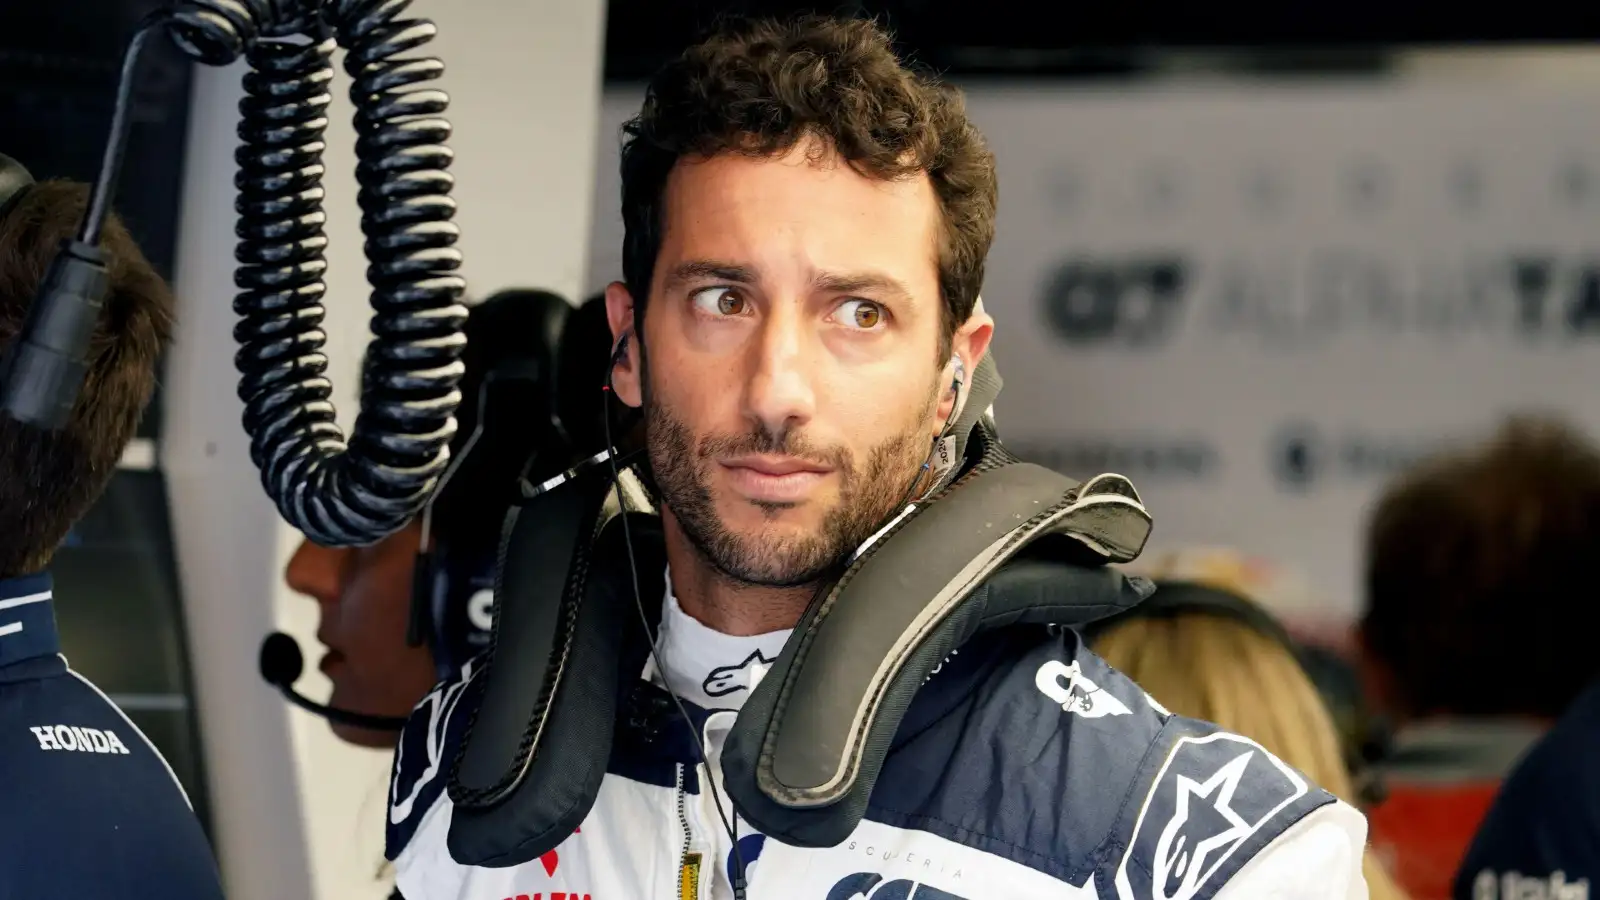 Daniel Ricciardo provides recovery update after Qatar Grand Prix doubts emerge